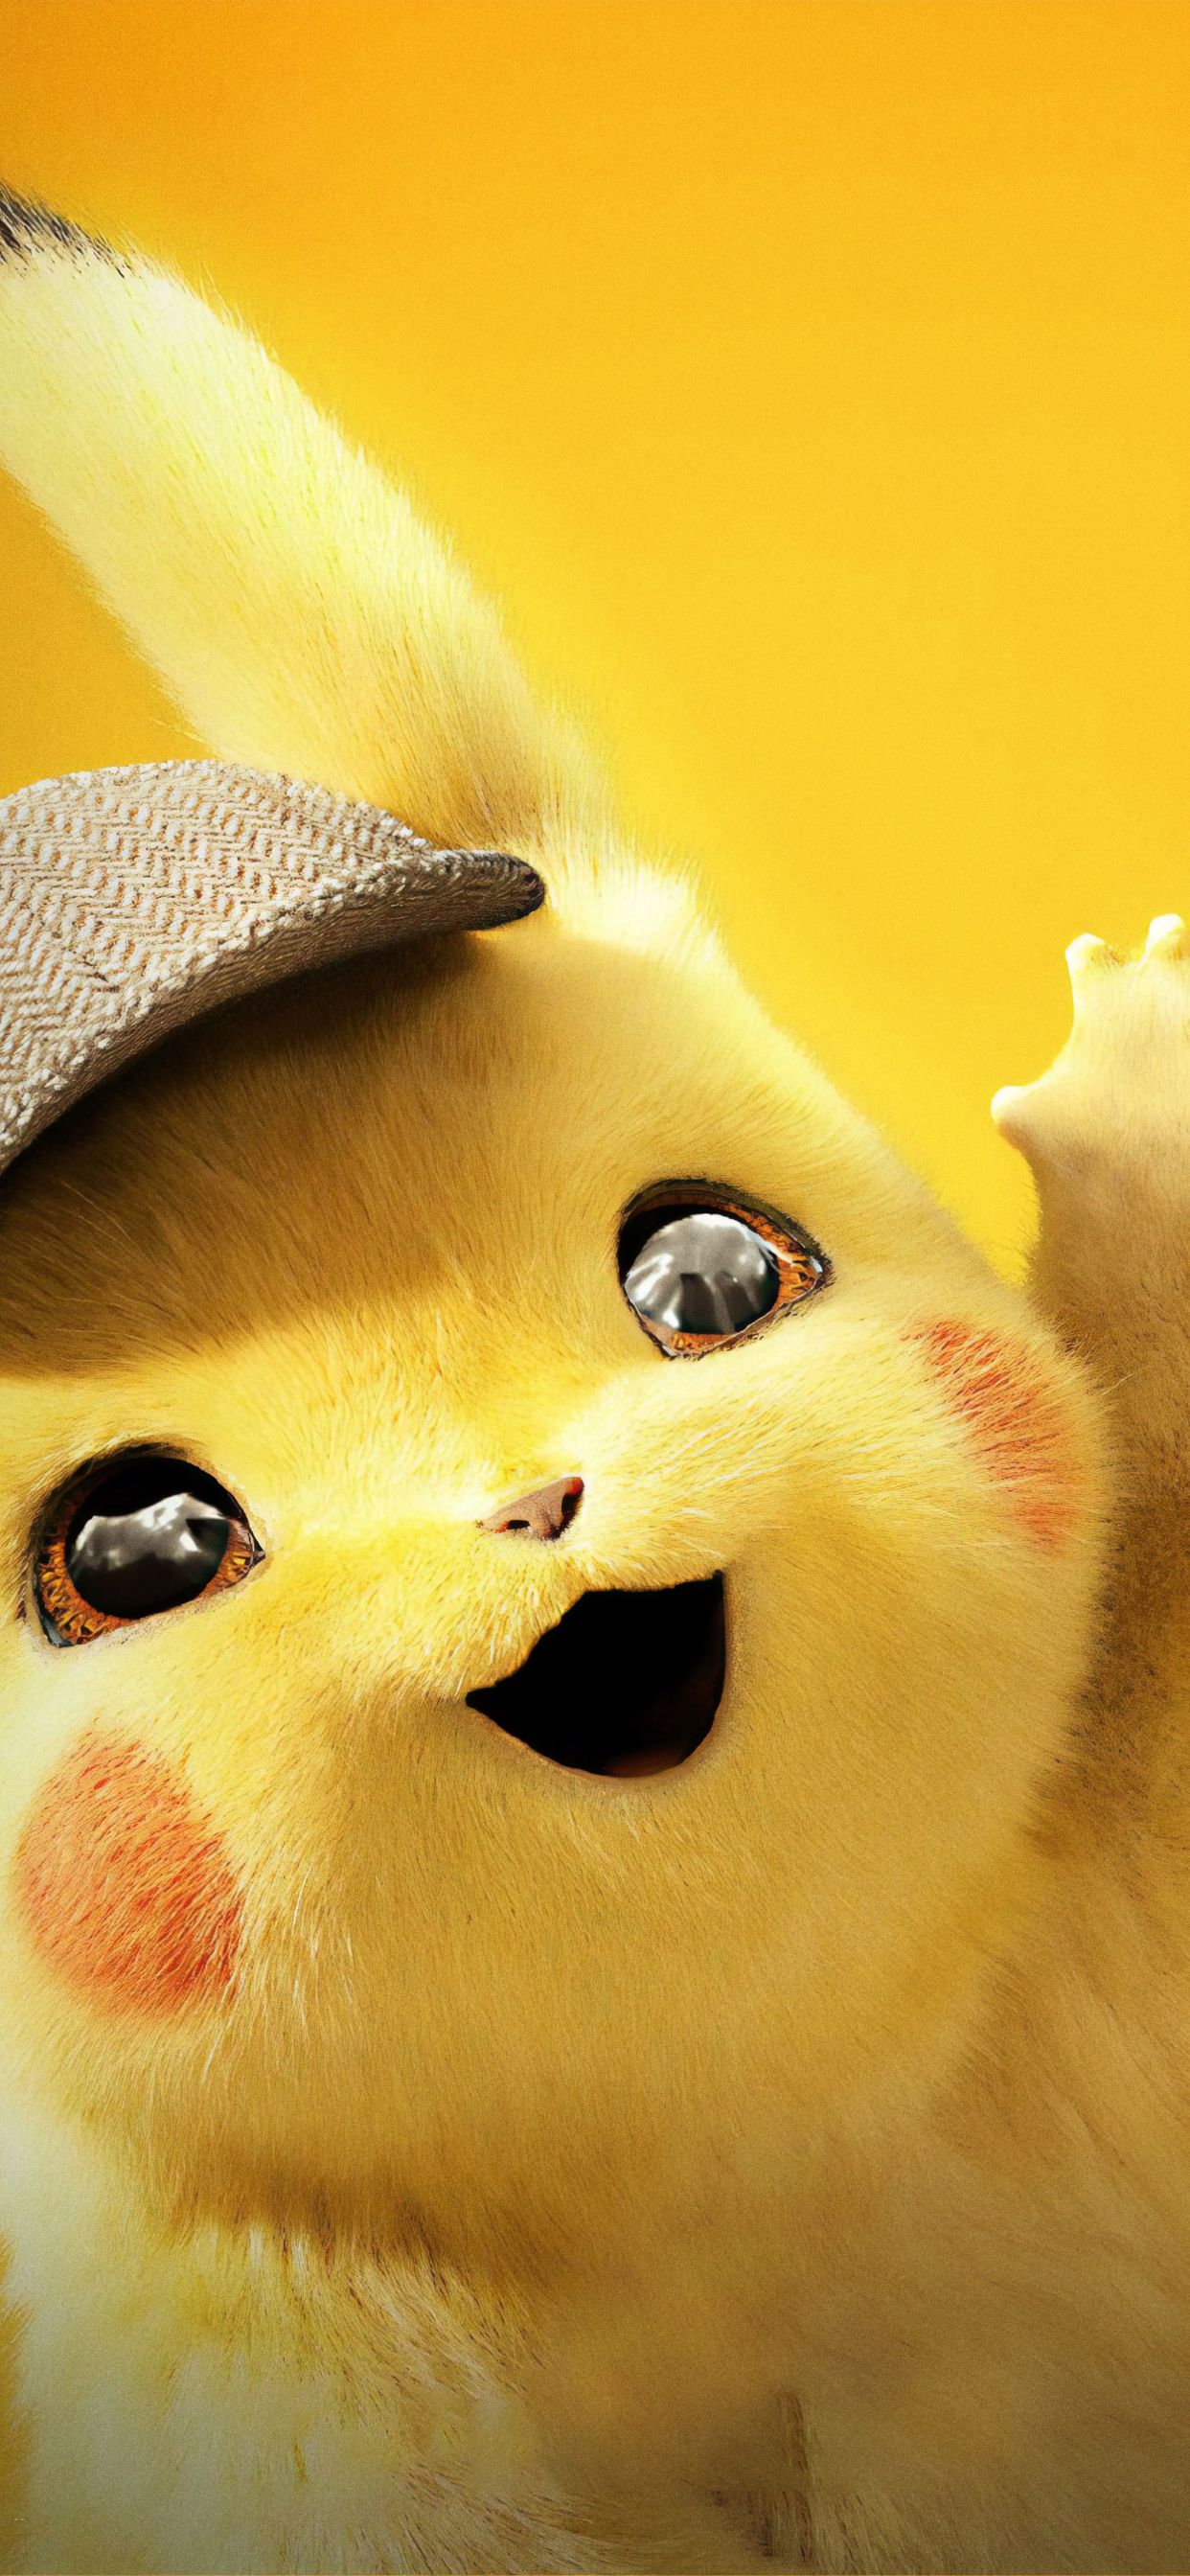 Pikachu Wallpapers  Top 35 Best Pikachu Backgrounds Download